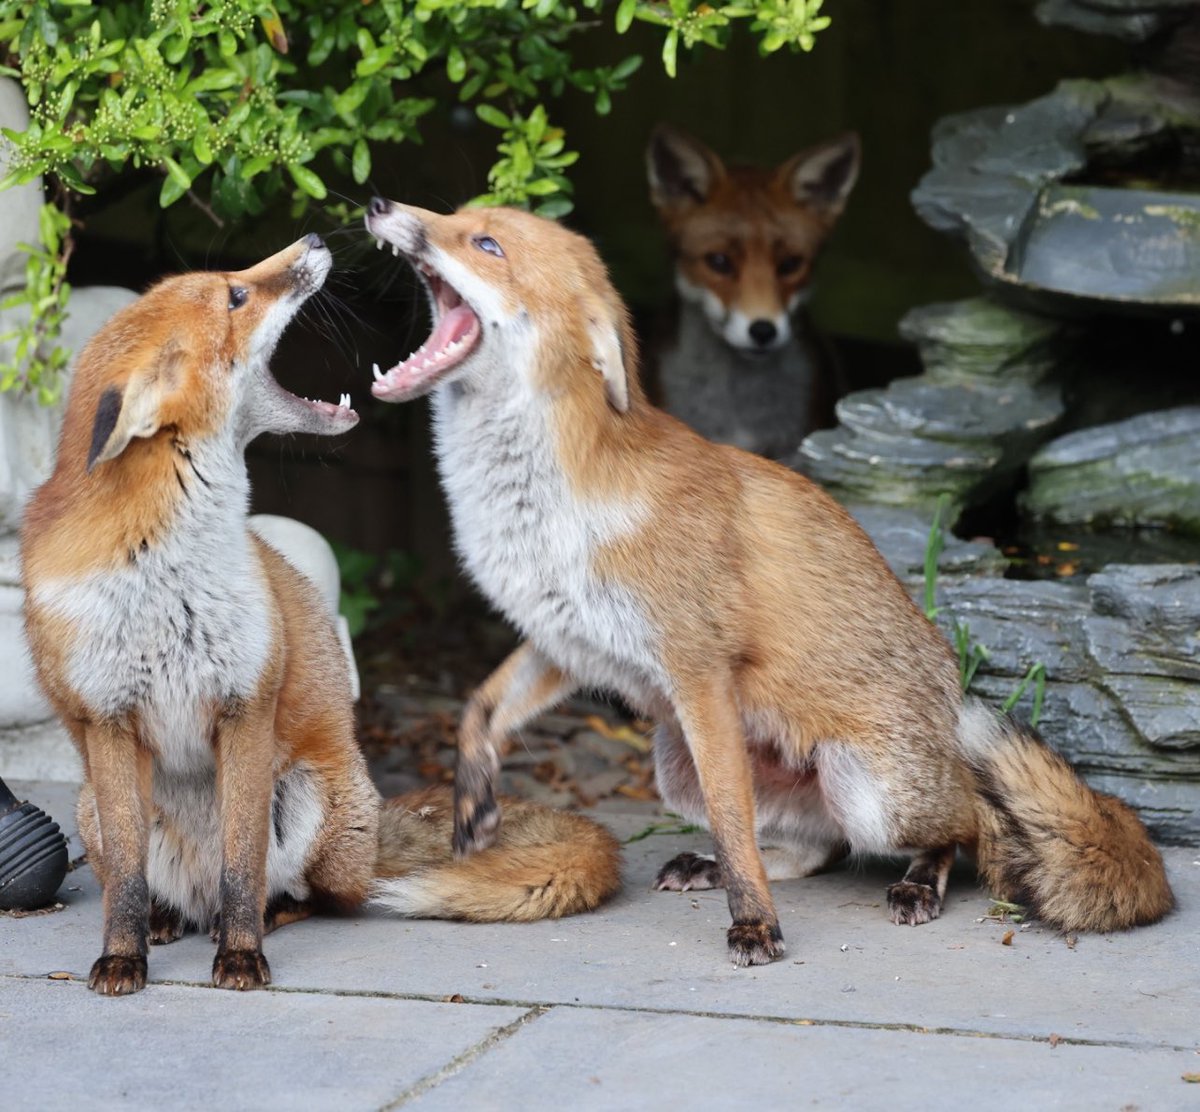 Bit of a kerfuffle going on #fox #Foxes #foxinmygarden #foxkit #foxlove #foxlovers #FoxOfTheDay #foxcub #zorro #fuchs #Renard #renarde #volpe #fäks #TwitterNatureCommunity #wildlifephotography #urbanfox #BBCWildlifePOTD #jessopsmoment